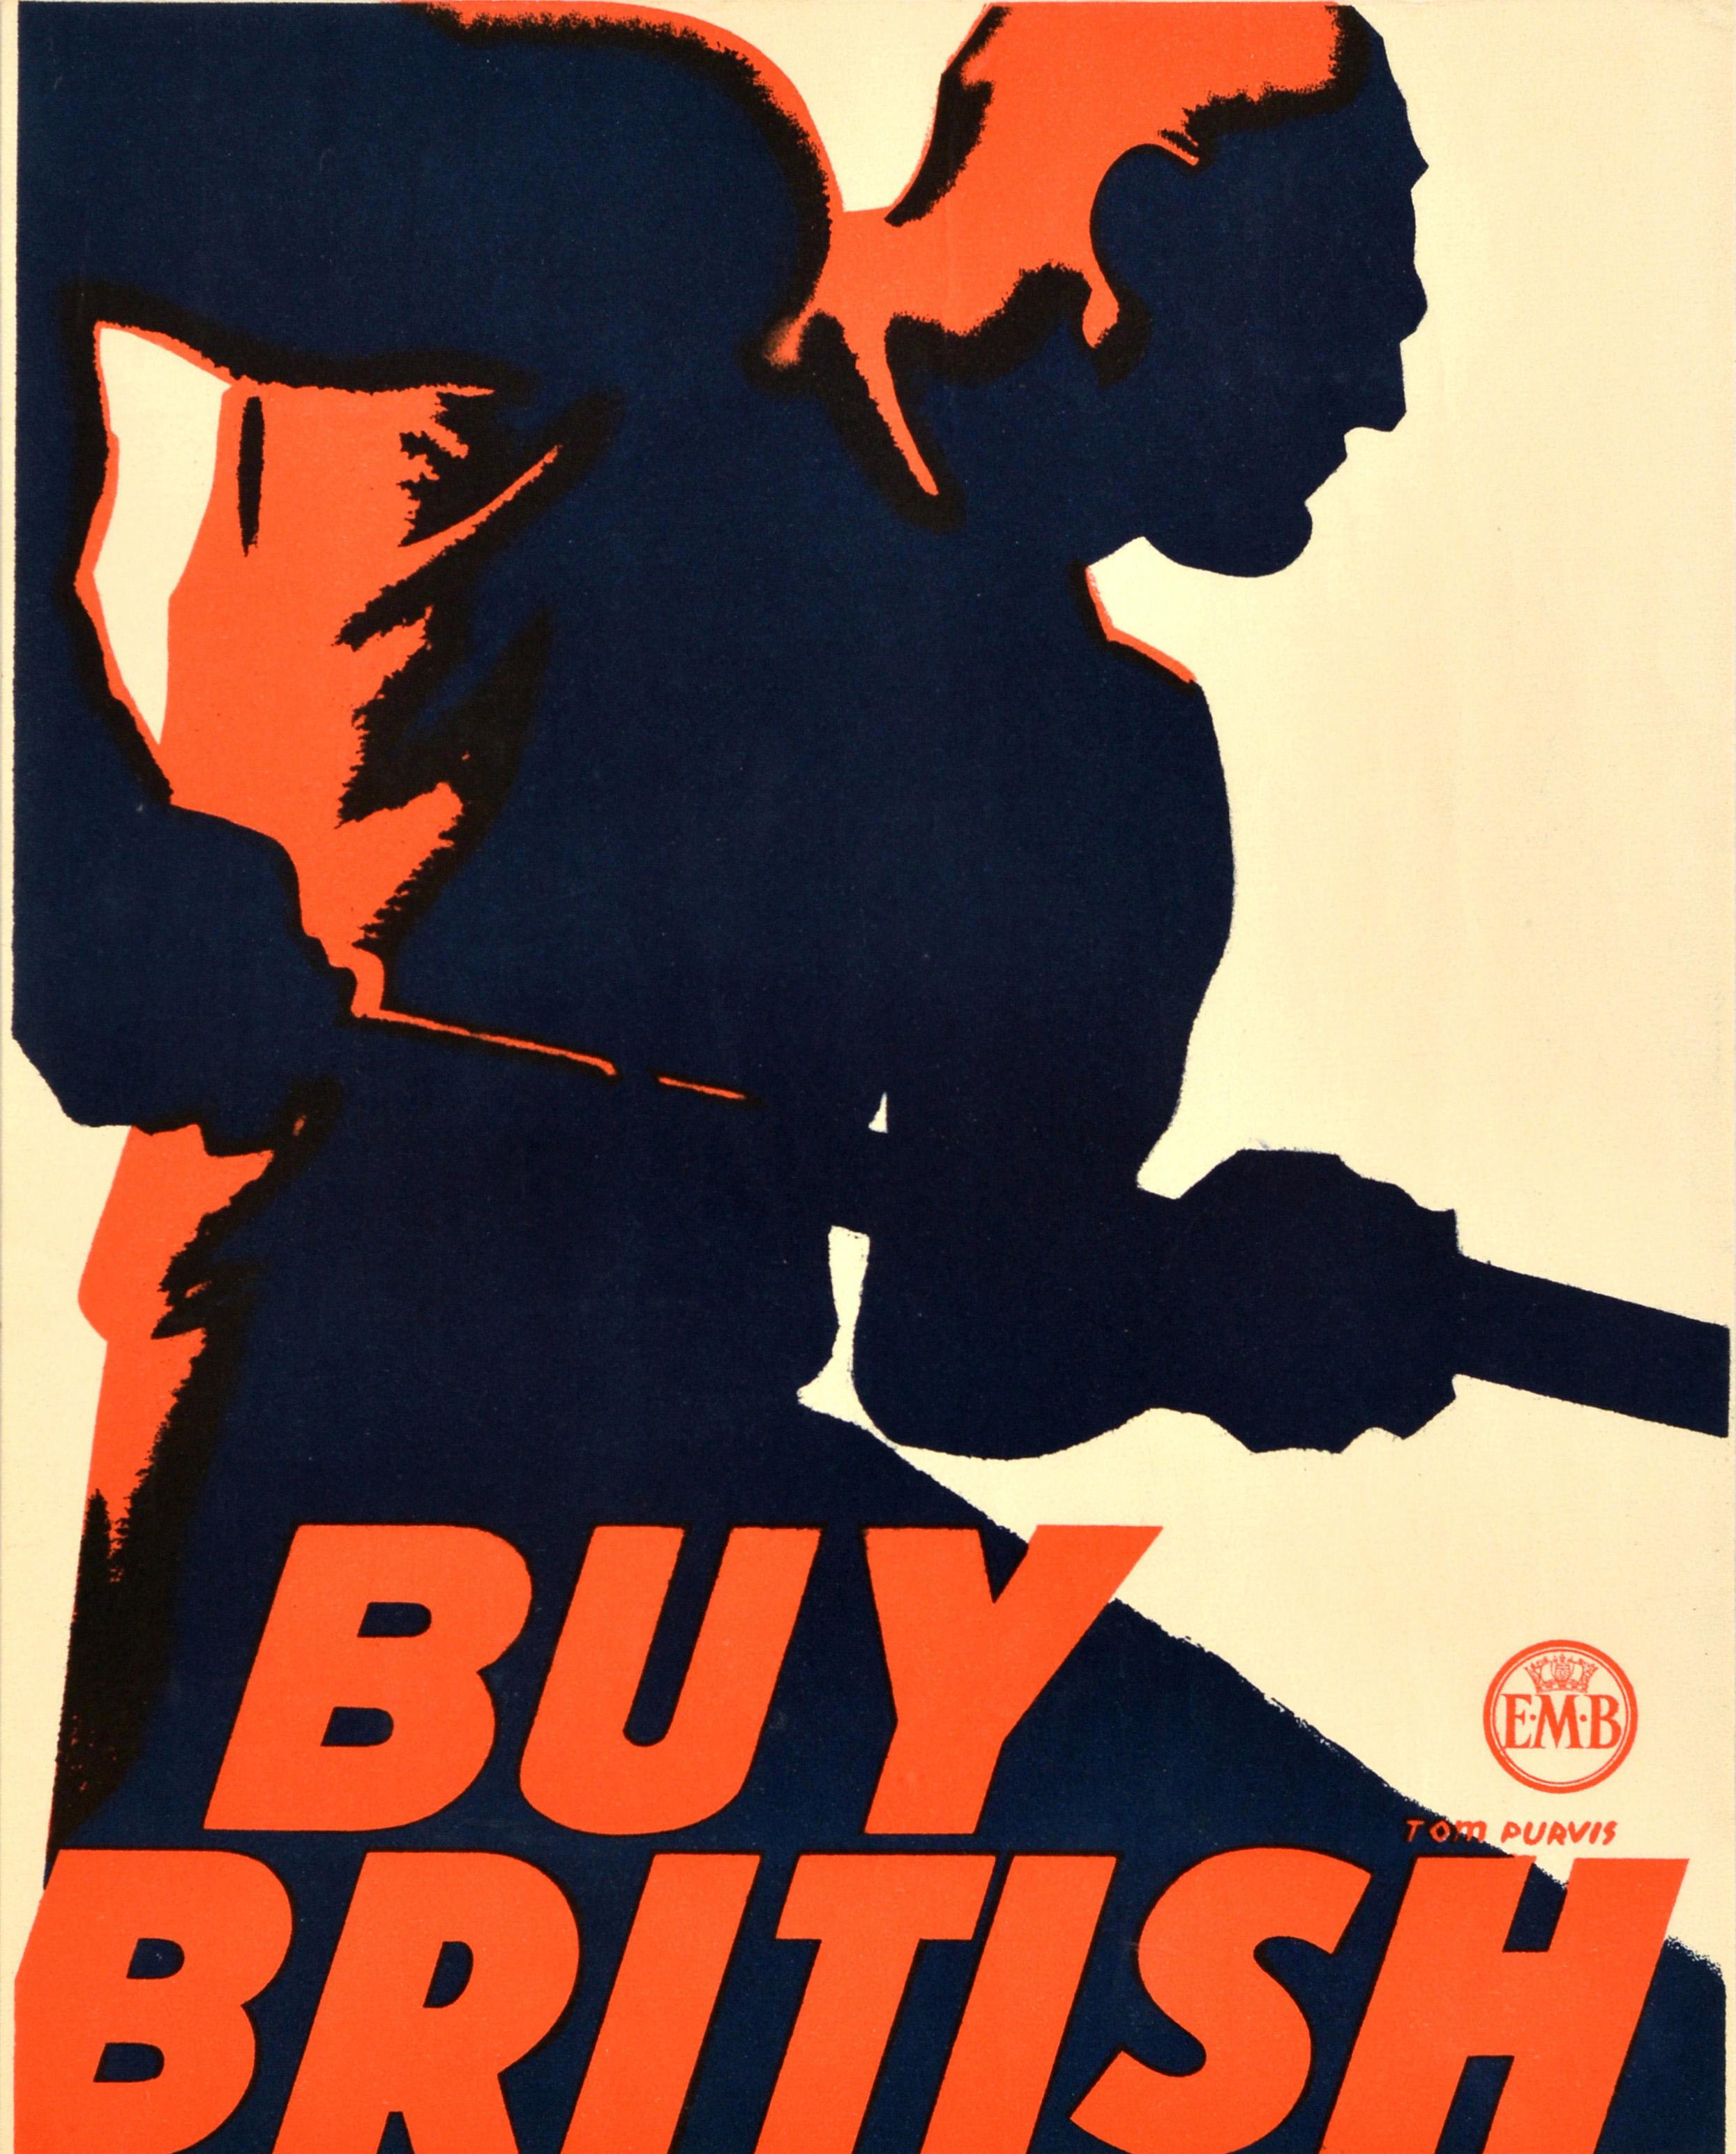 Original Vintage Poster Buy British Tom Purvis EMB Empire Marketing Board For Sale 2